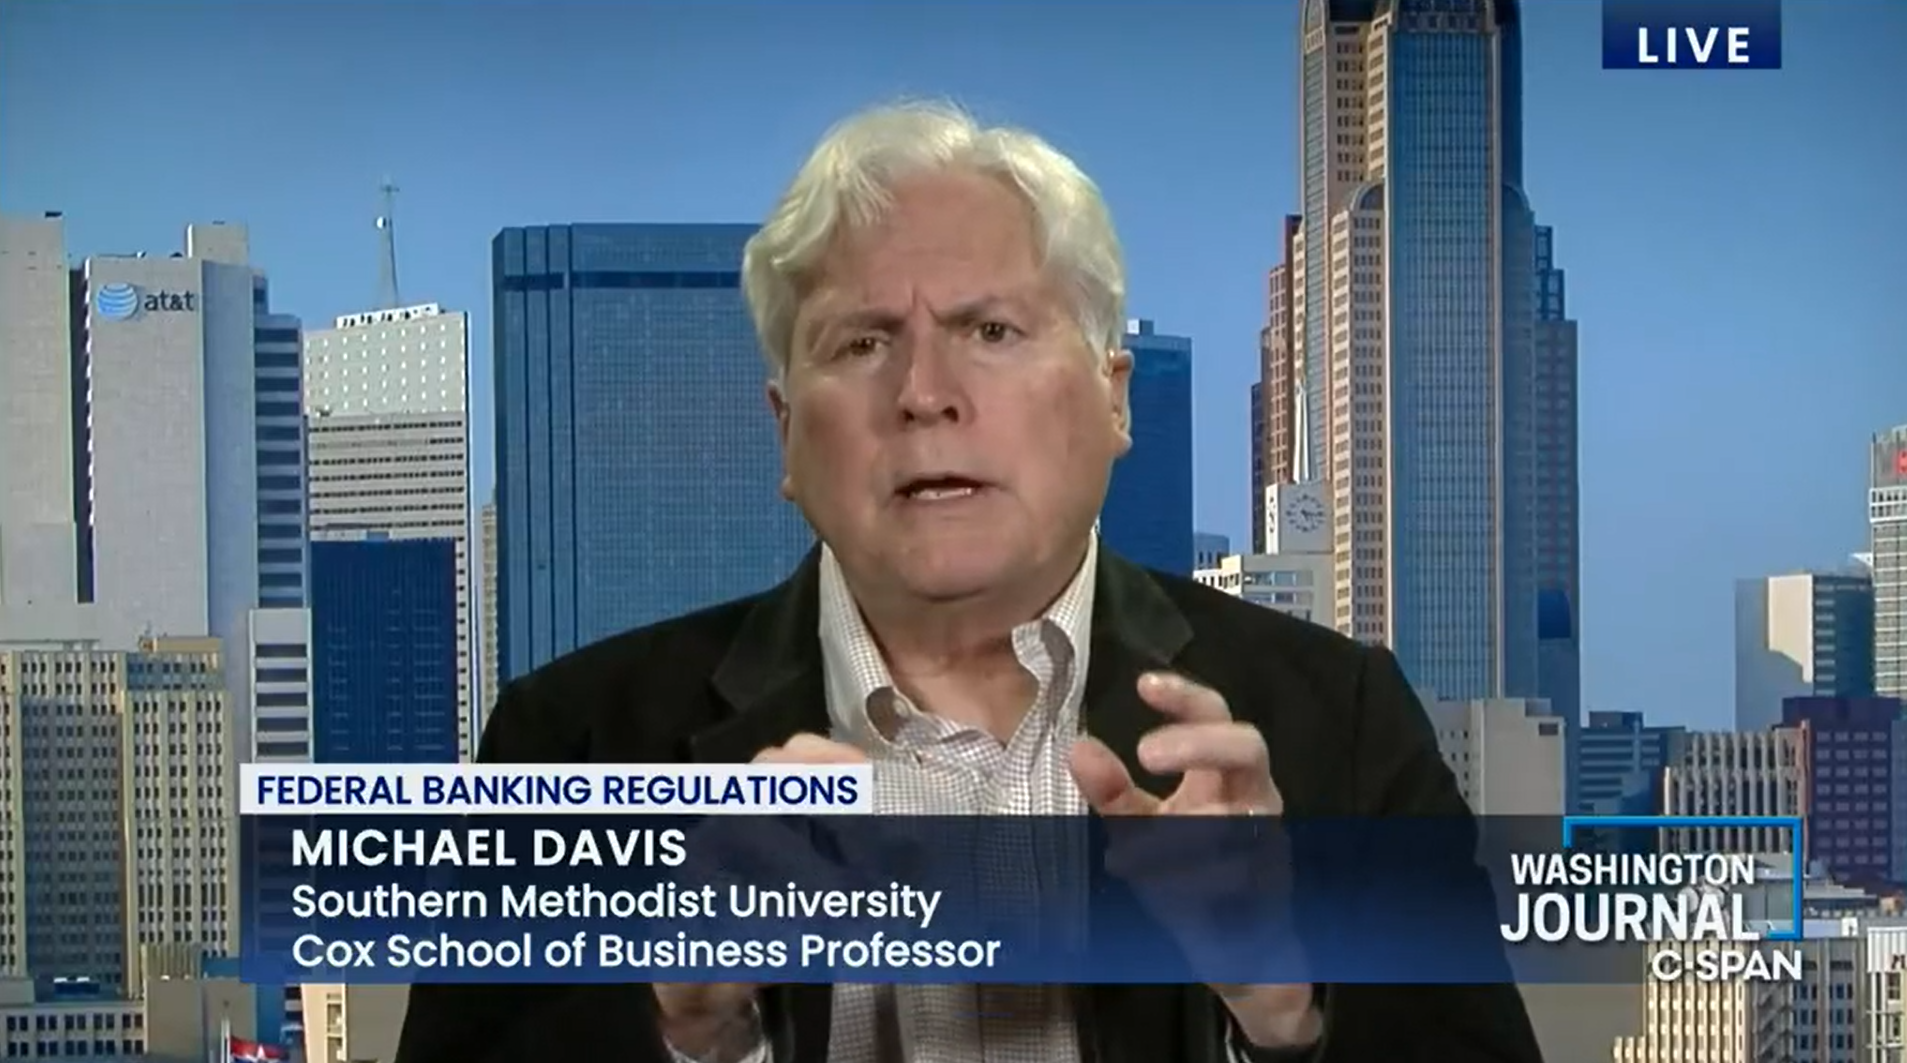 Professor Michael Davis speaks to CSPAN in an interview